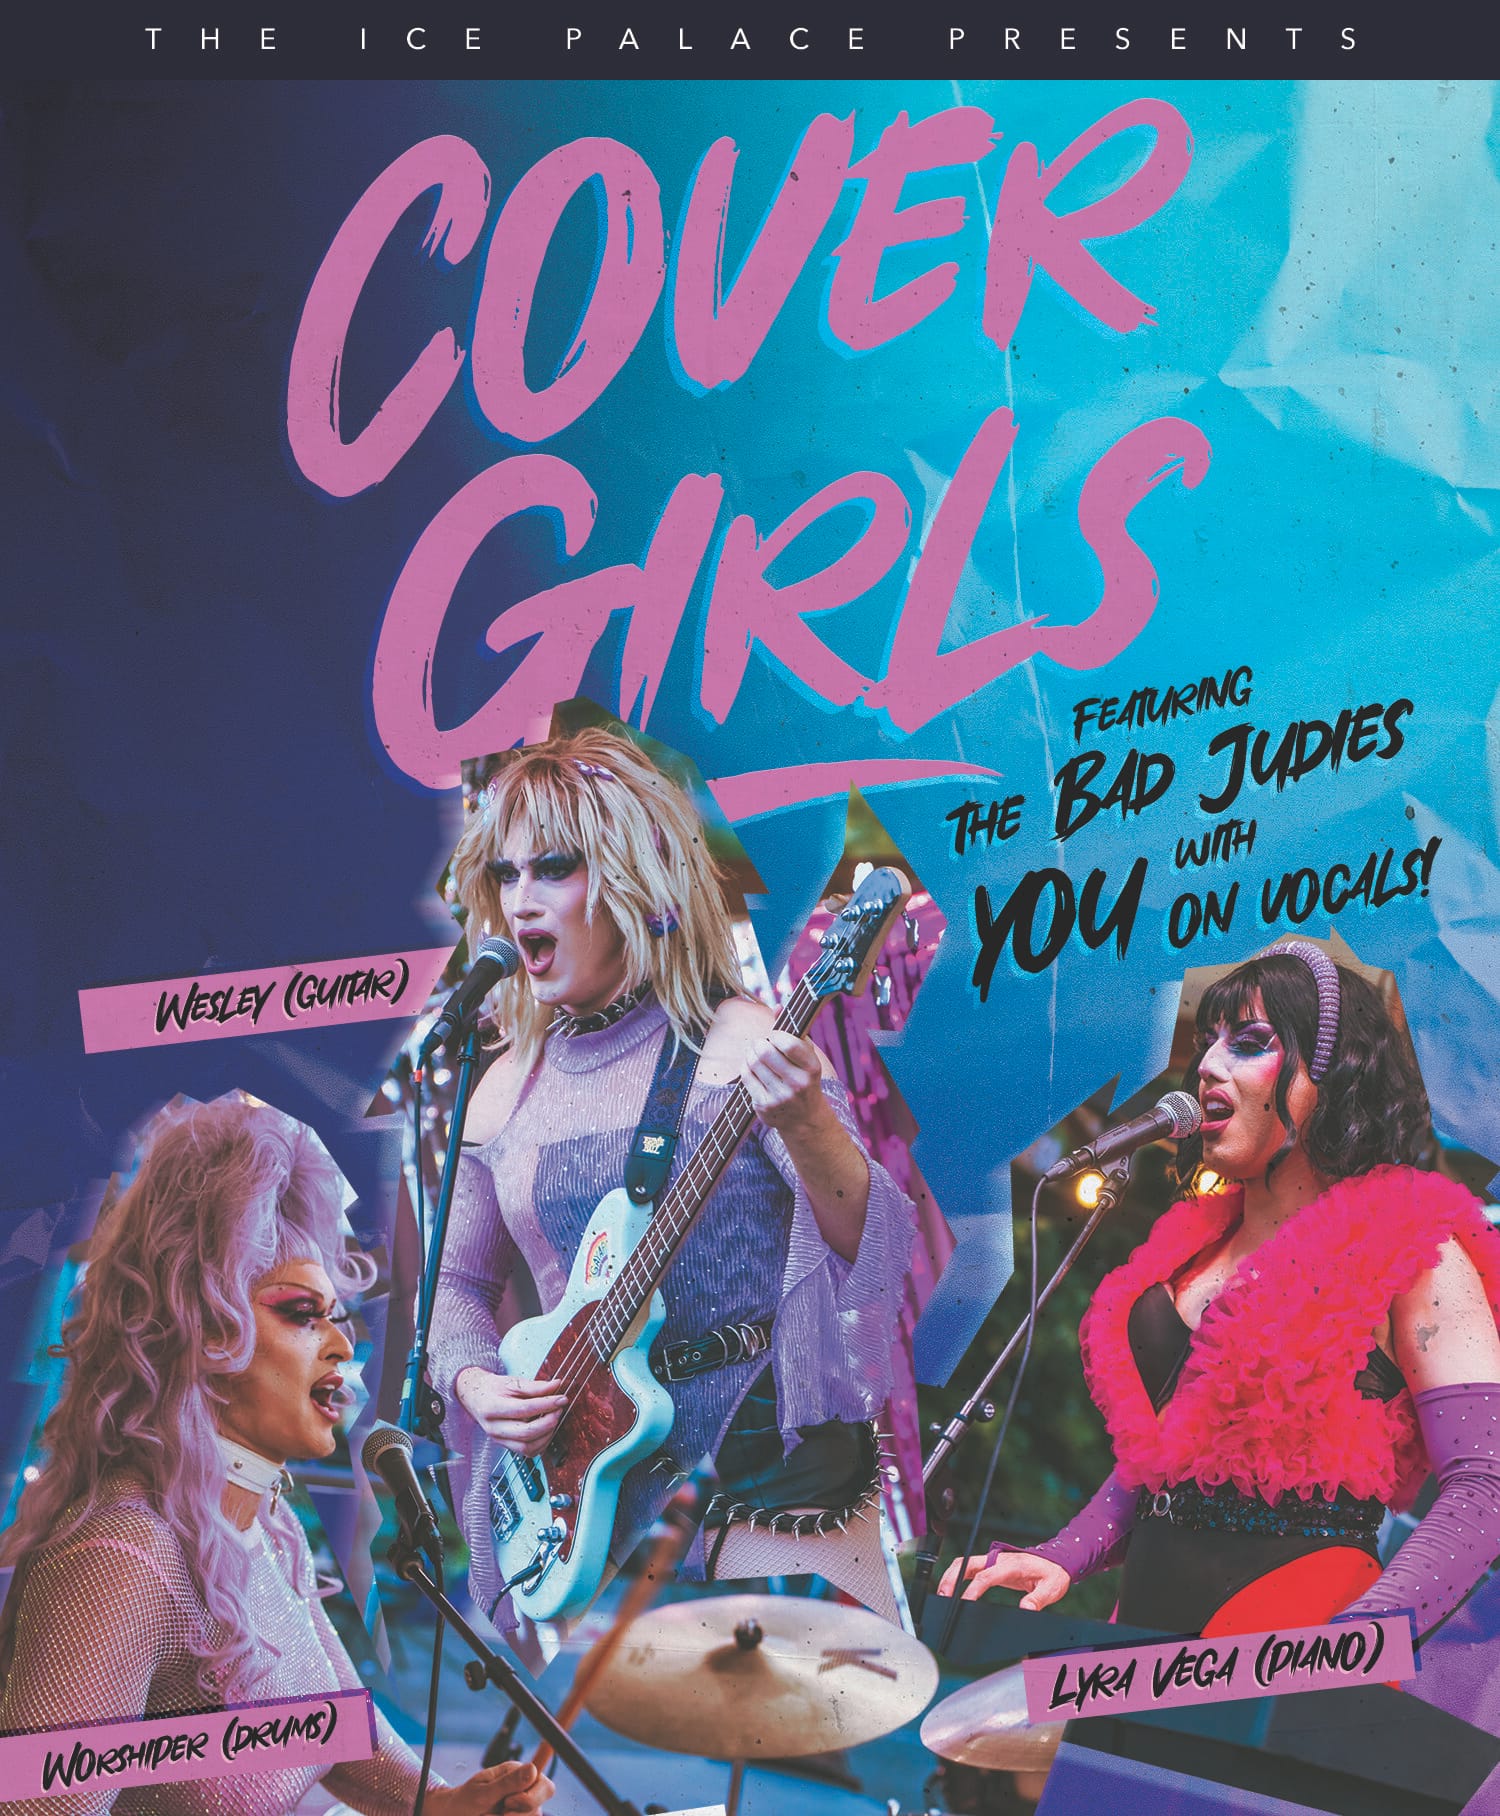 COVER GIRLS